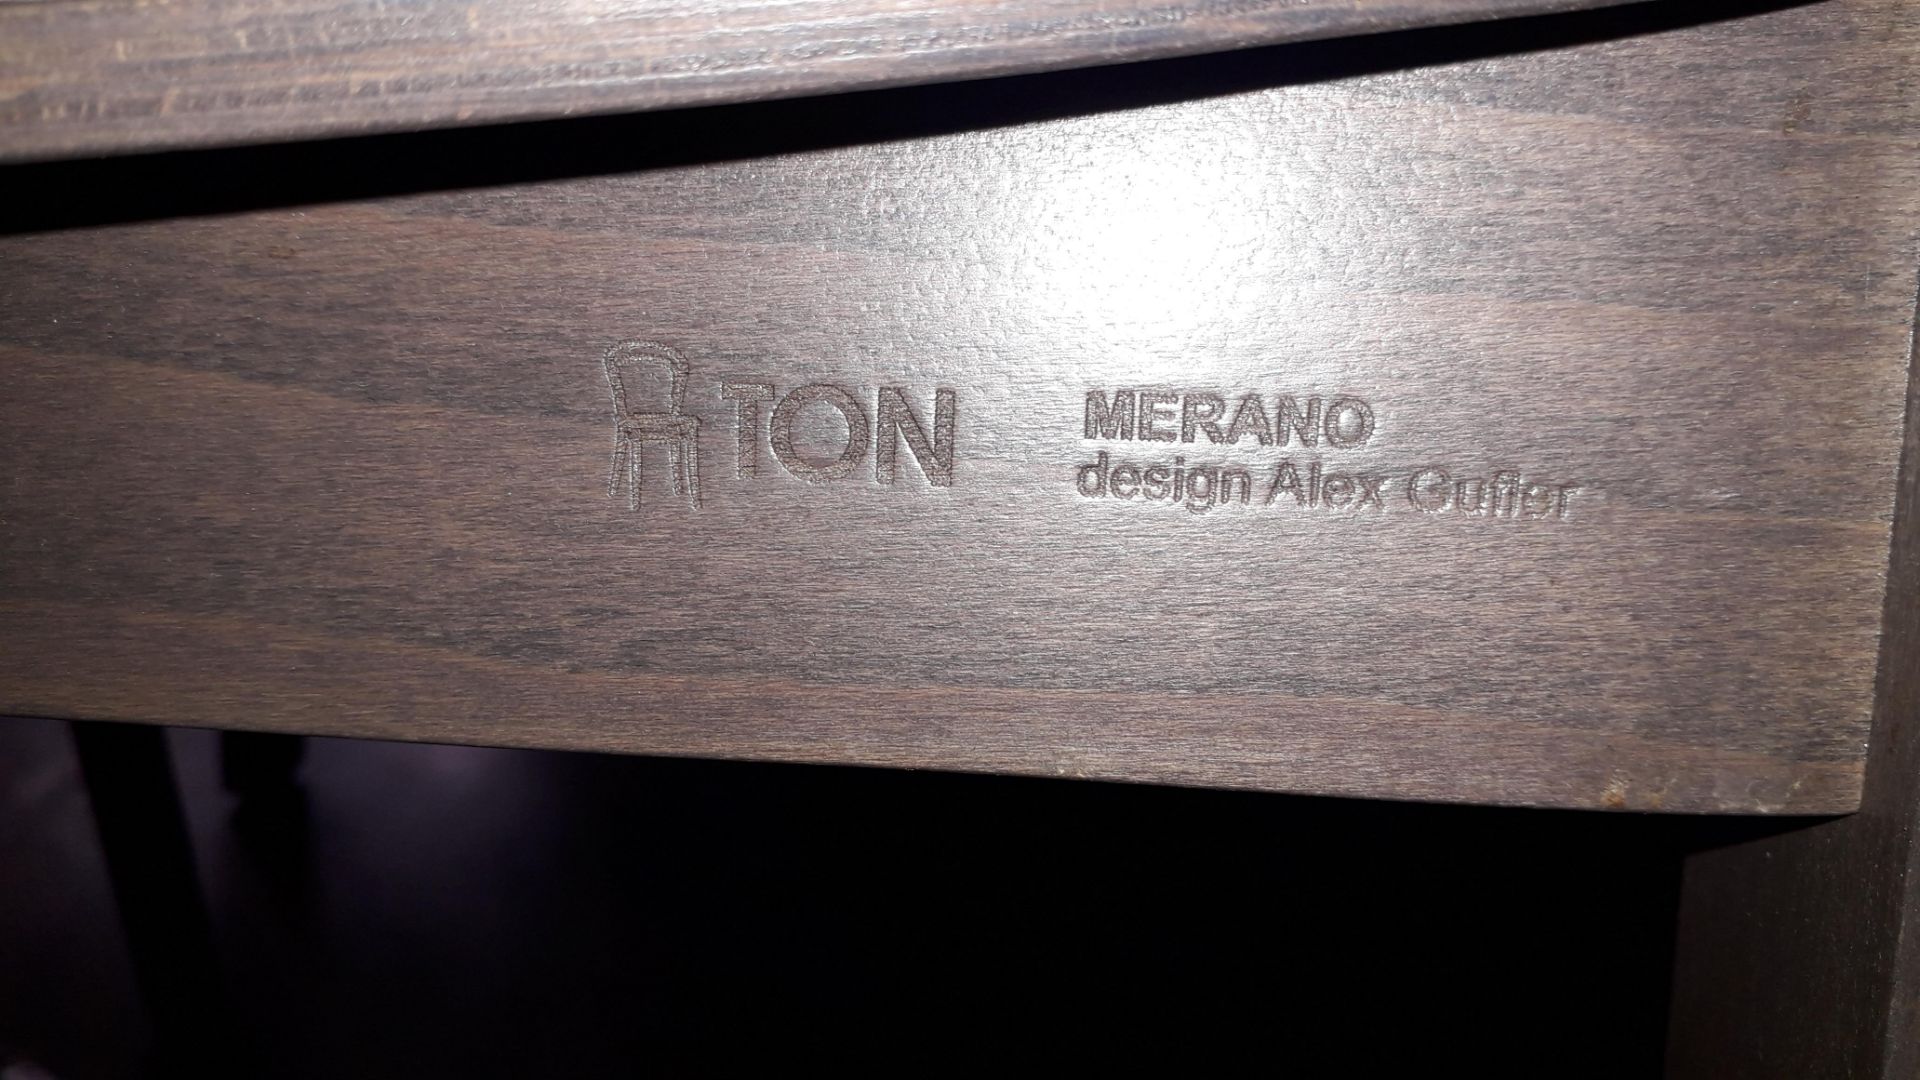 6 Ton Merano by Alex Gufler mushroom leather upholstered hardwood dining chairs - Image 3 of 3